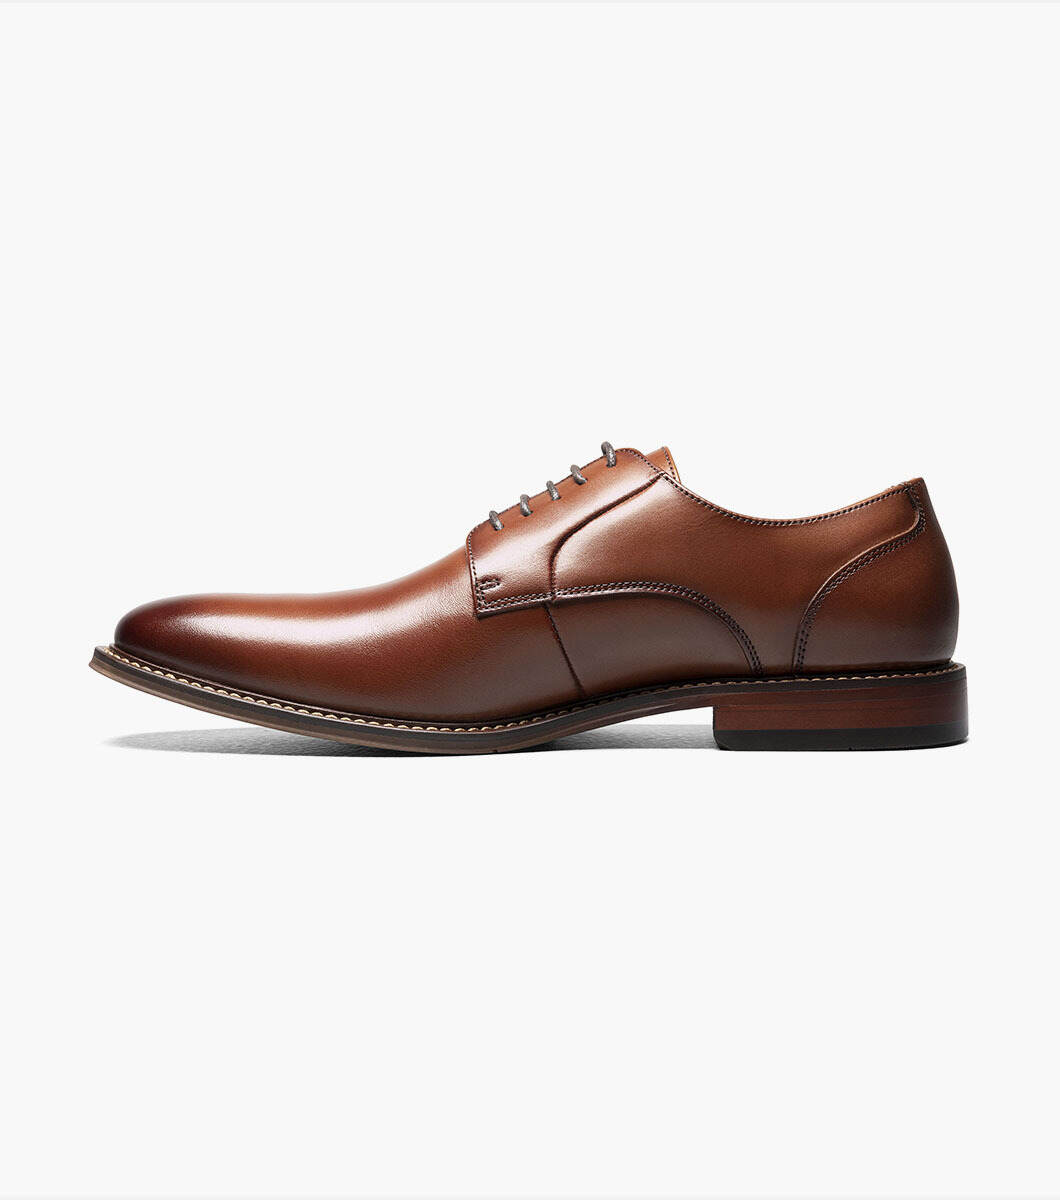 Men's Dress Shoes Plain Toe Oxford Light Aqua Multi Leather STACY ADAMS 25211 